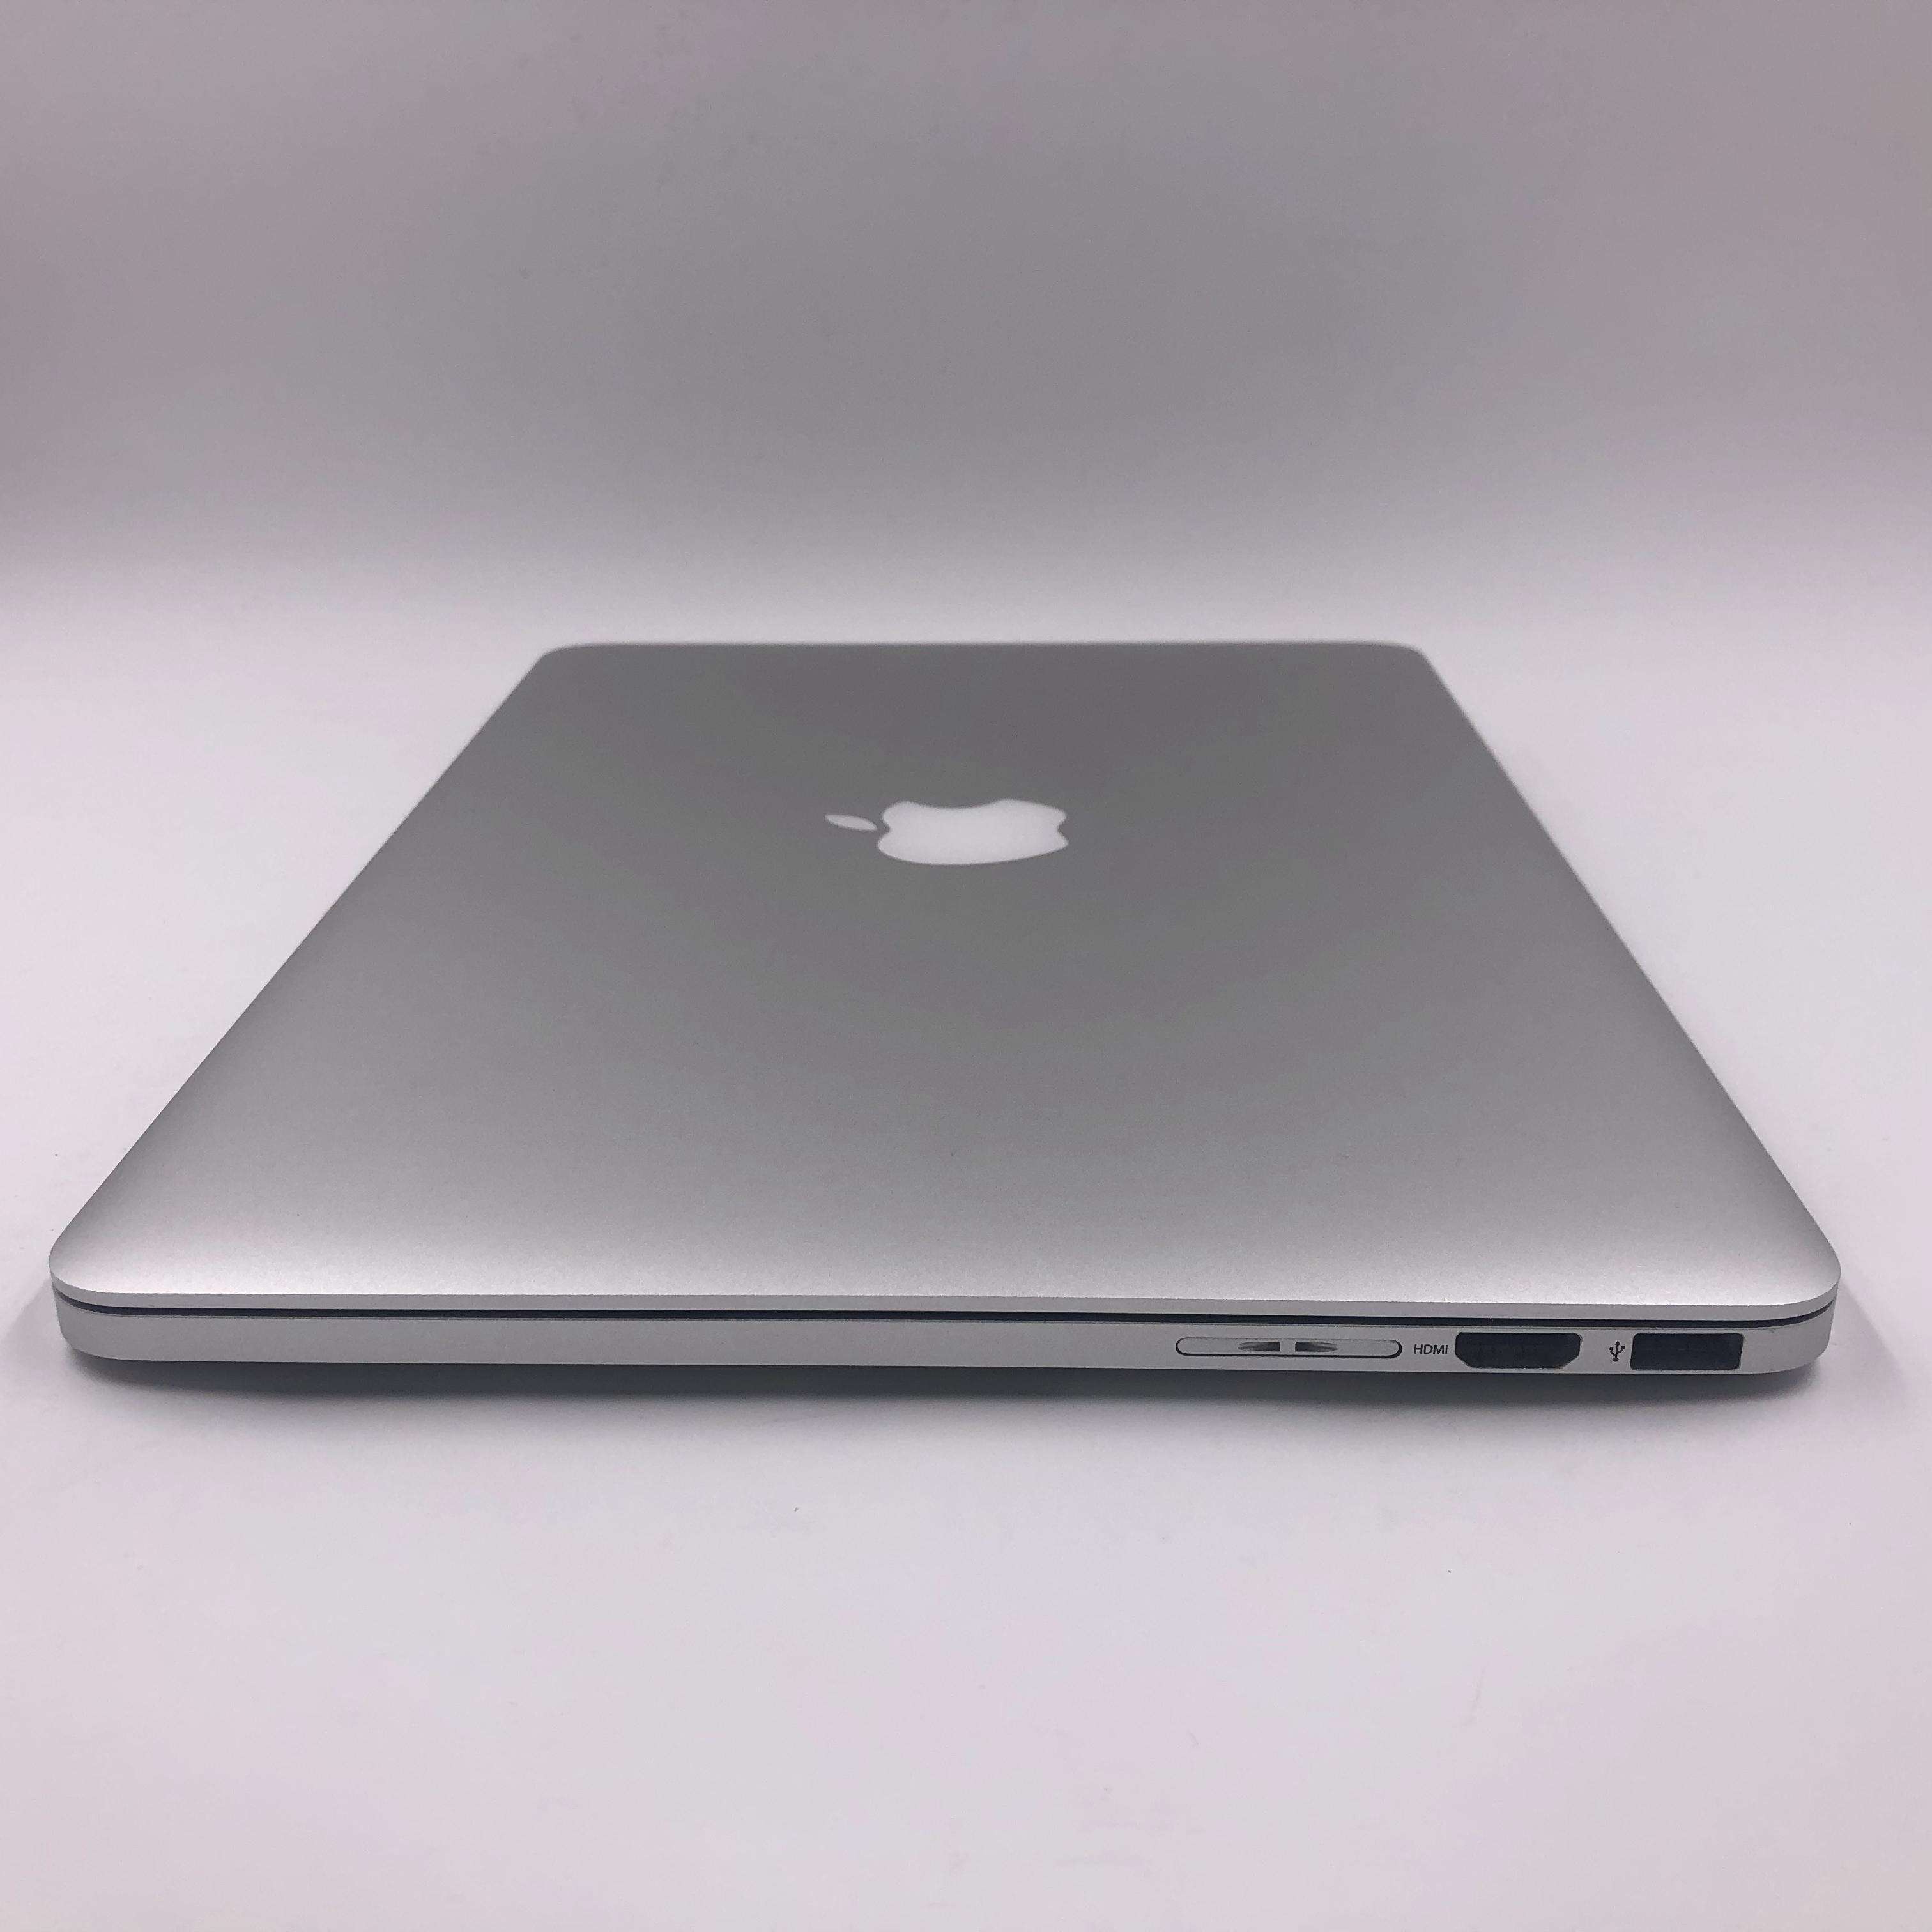 MacBook Pro (13",2015) 内存_8G/CPU_2.7GHz Intel Core i5/硬盘_256G 国行